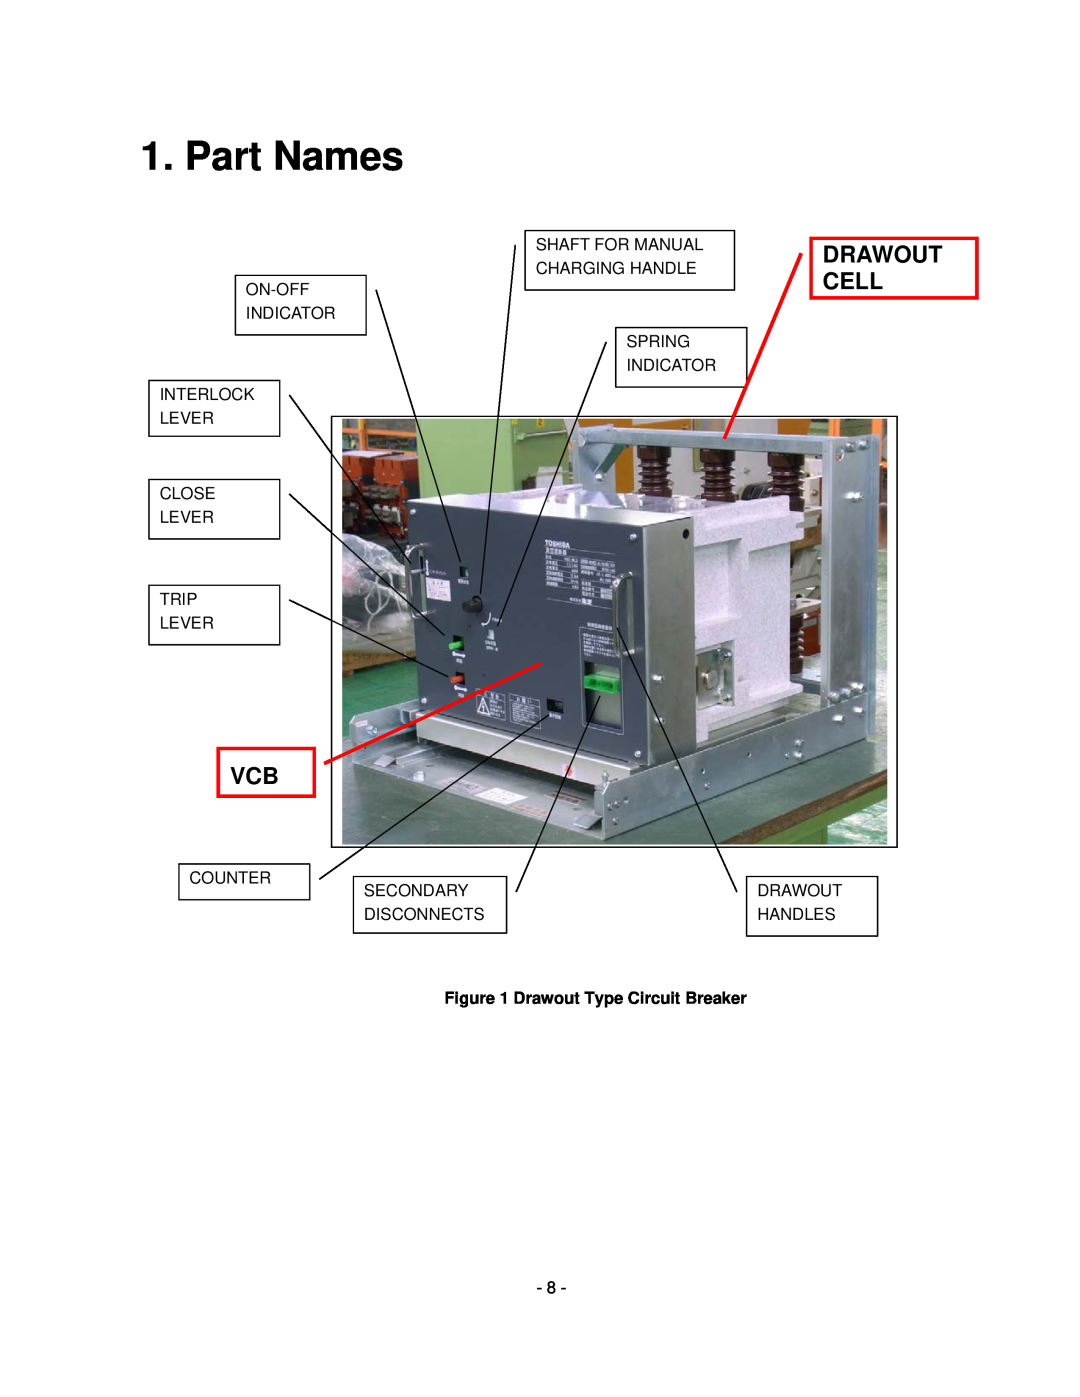 Toshiba HV6CS-MLD, H6A-HLS operation manual Part Names, Drawout Cell 